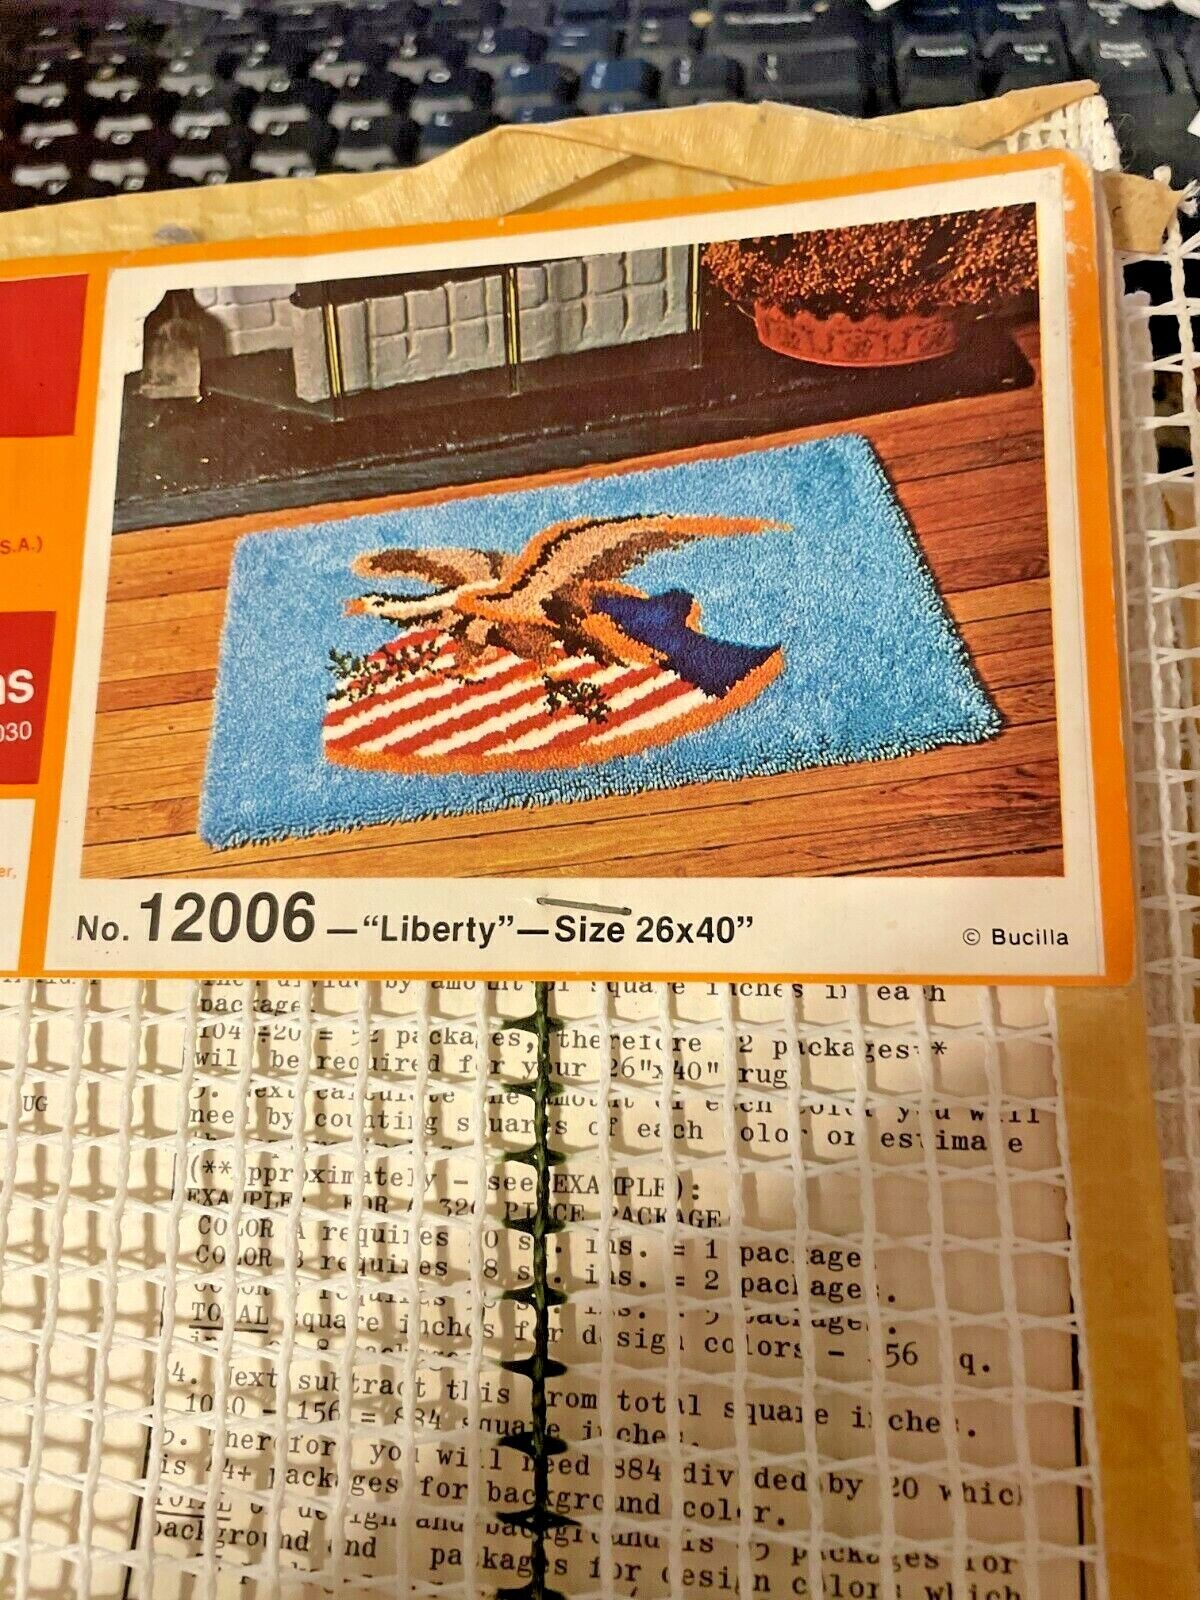 Bucilla Latch Hook Canvas "liberty" #12006, 26x40", Great Condition